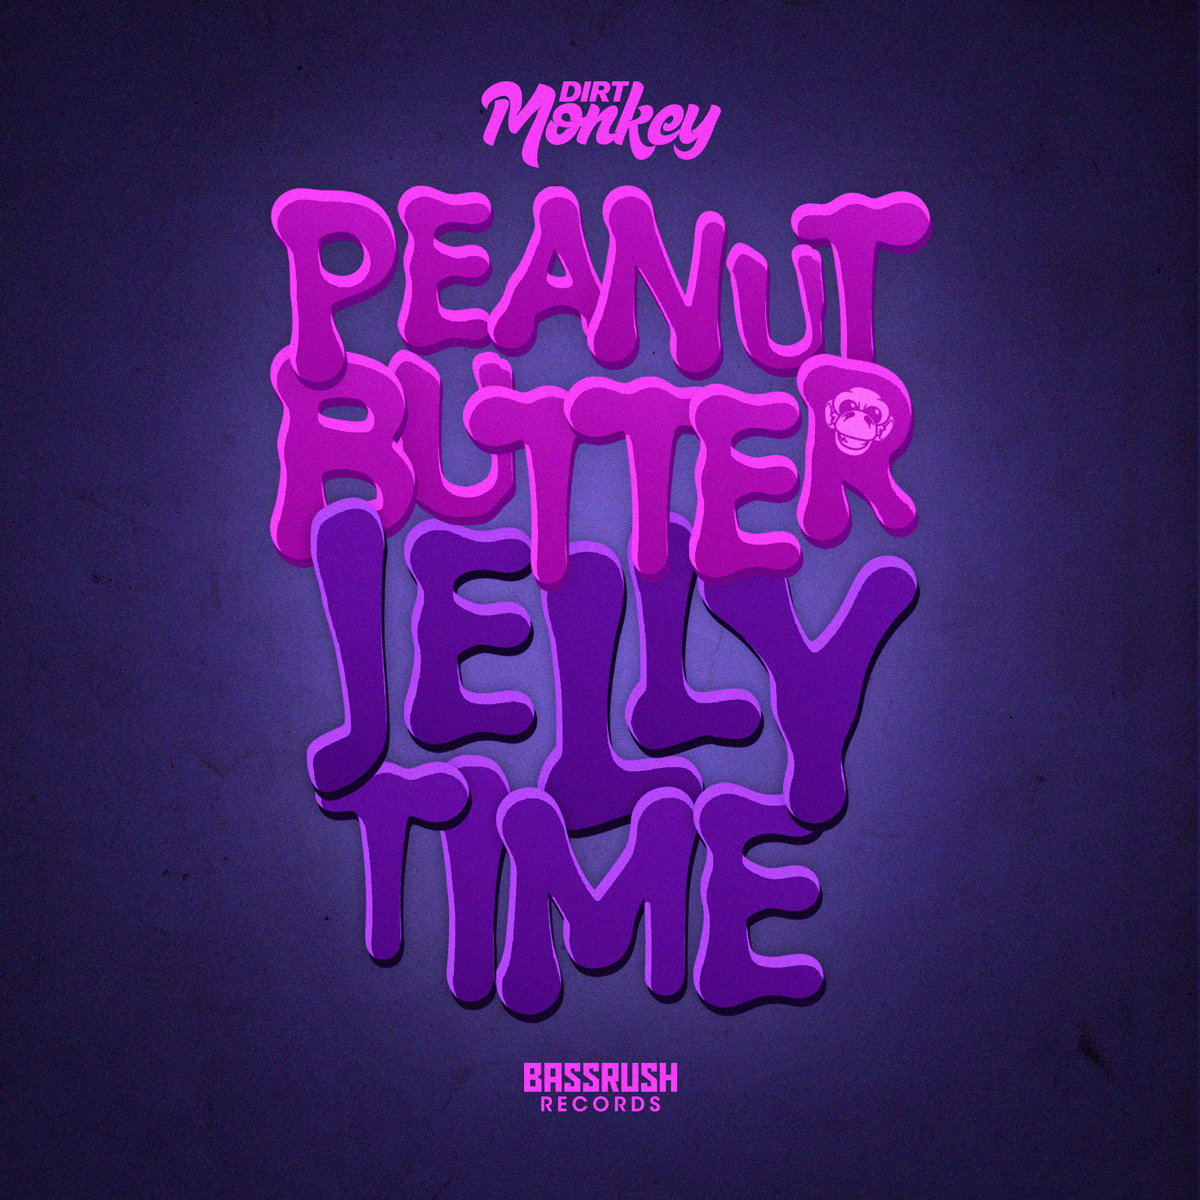 Peanut Butter Jelly Time DJ's - Gummy Bear: listen with lyrics